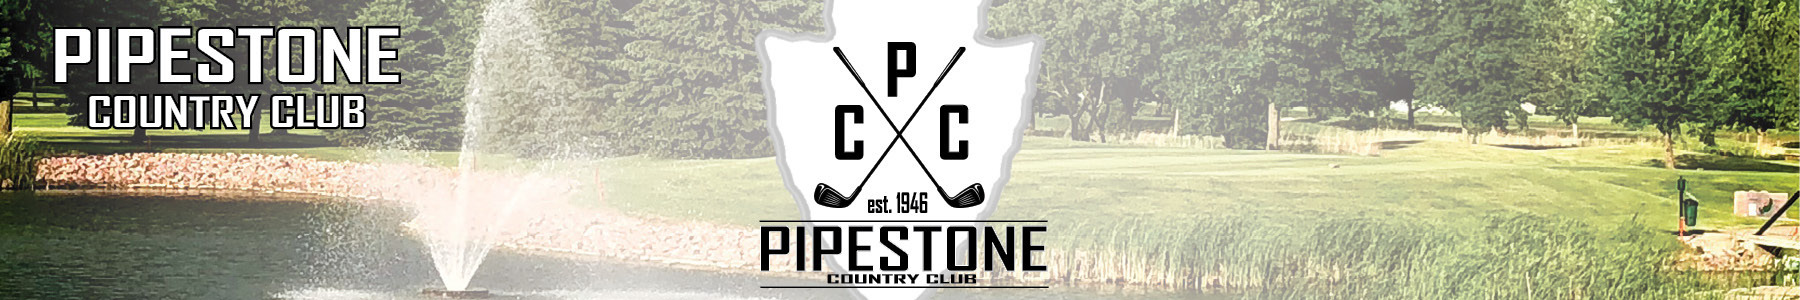 Pipestone Country Club